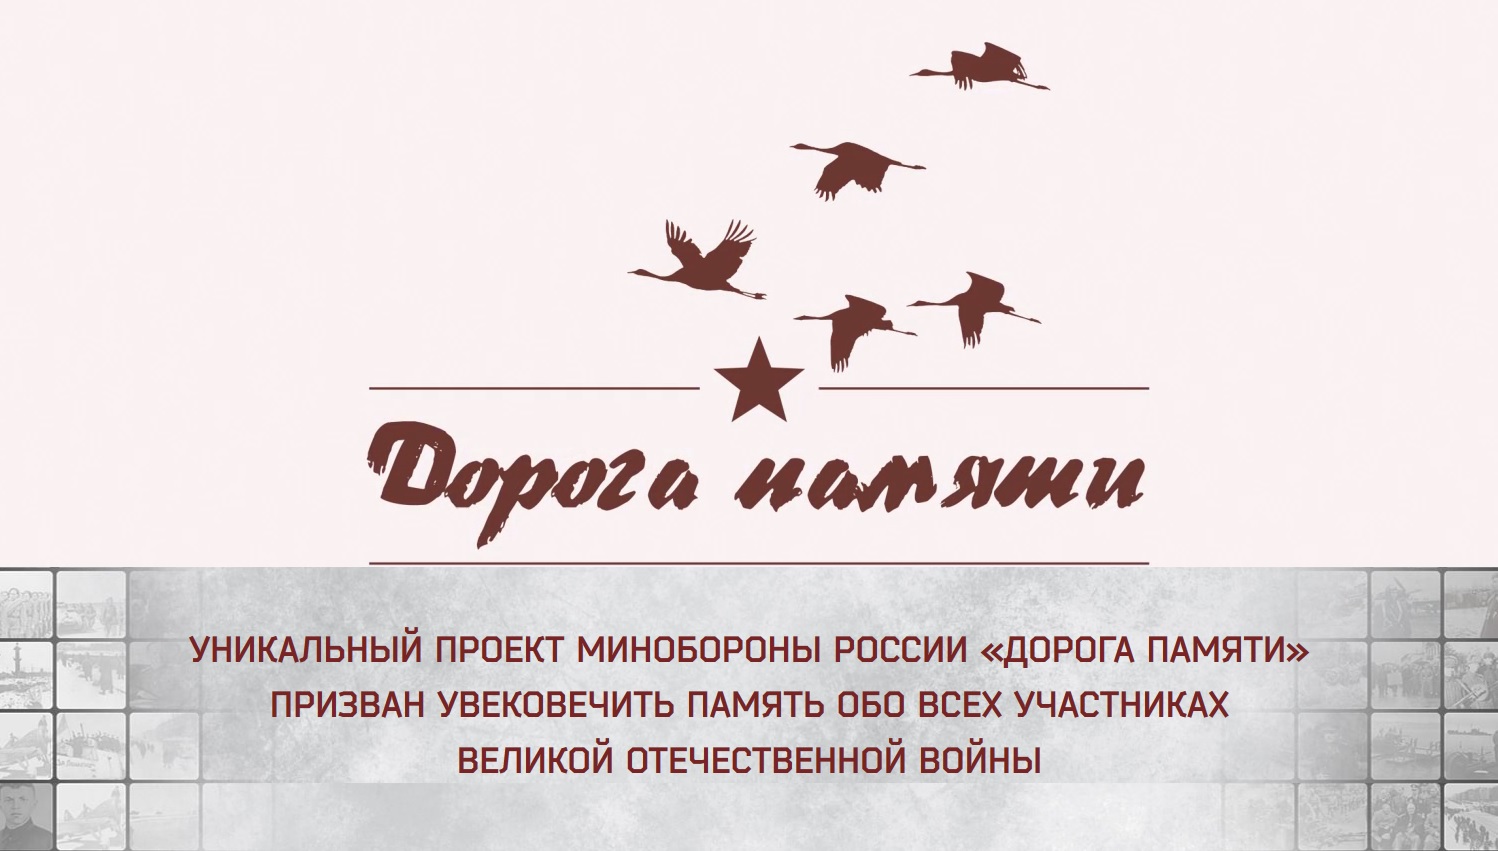 Эмблема Проекта "Дорога Памяти"